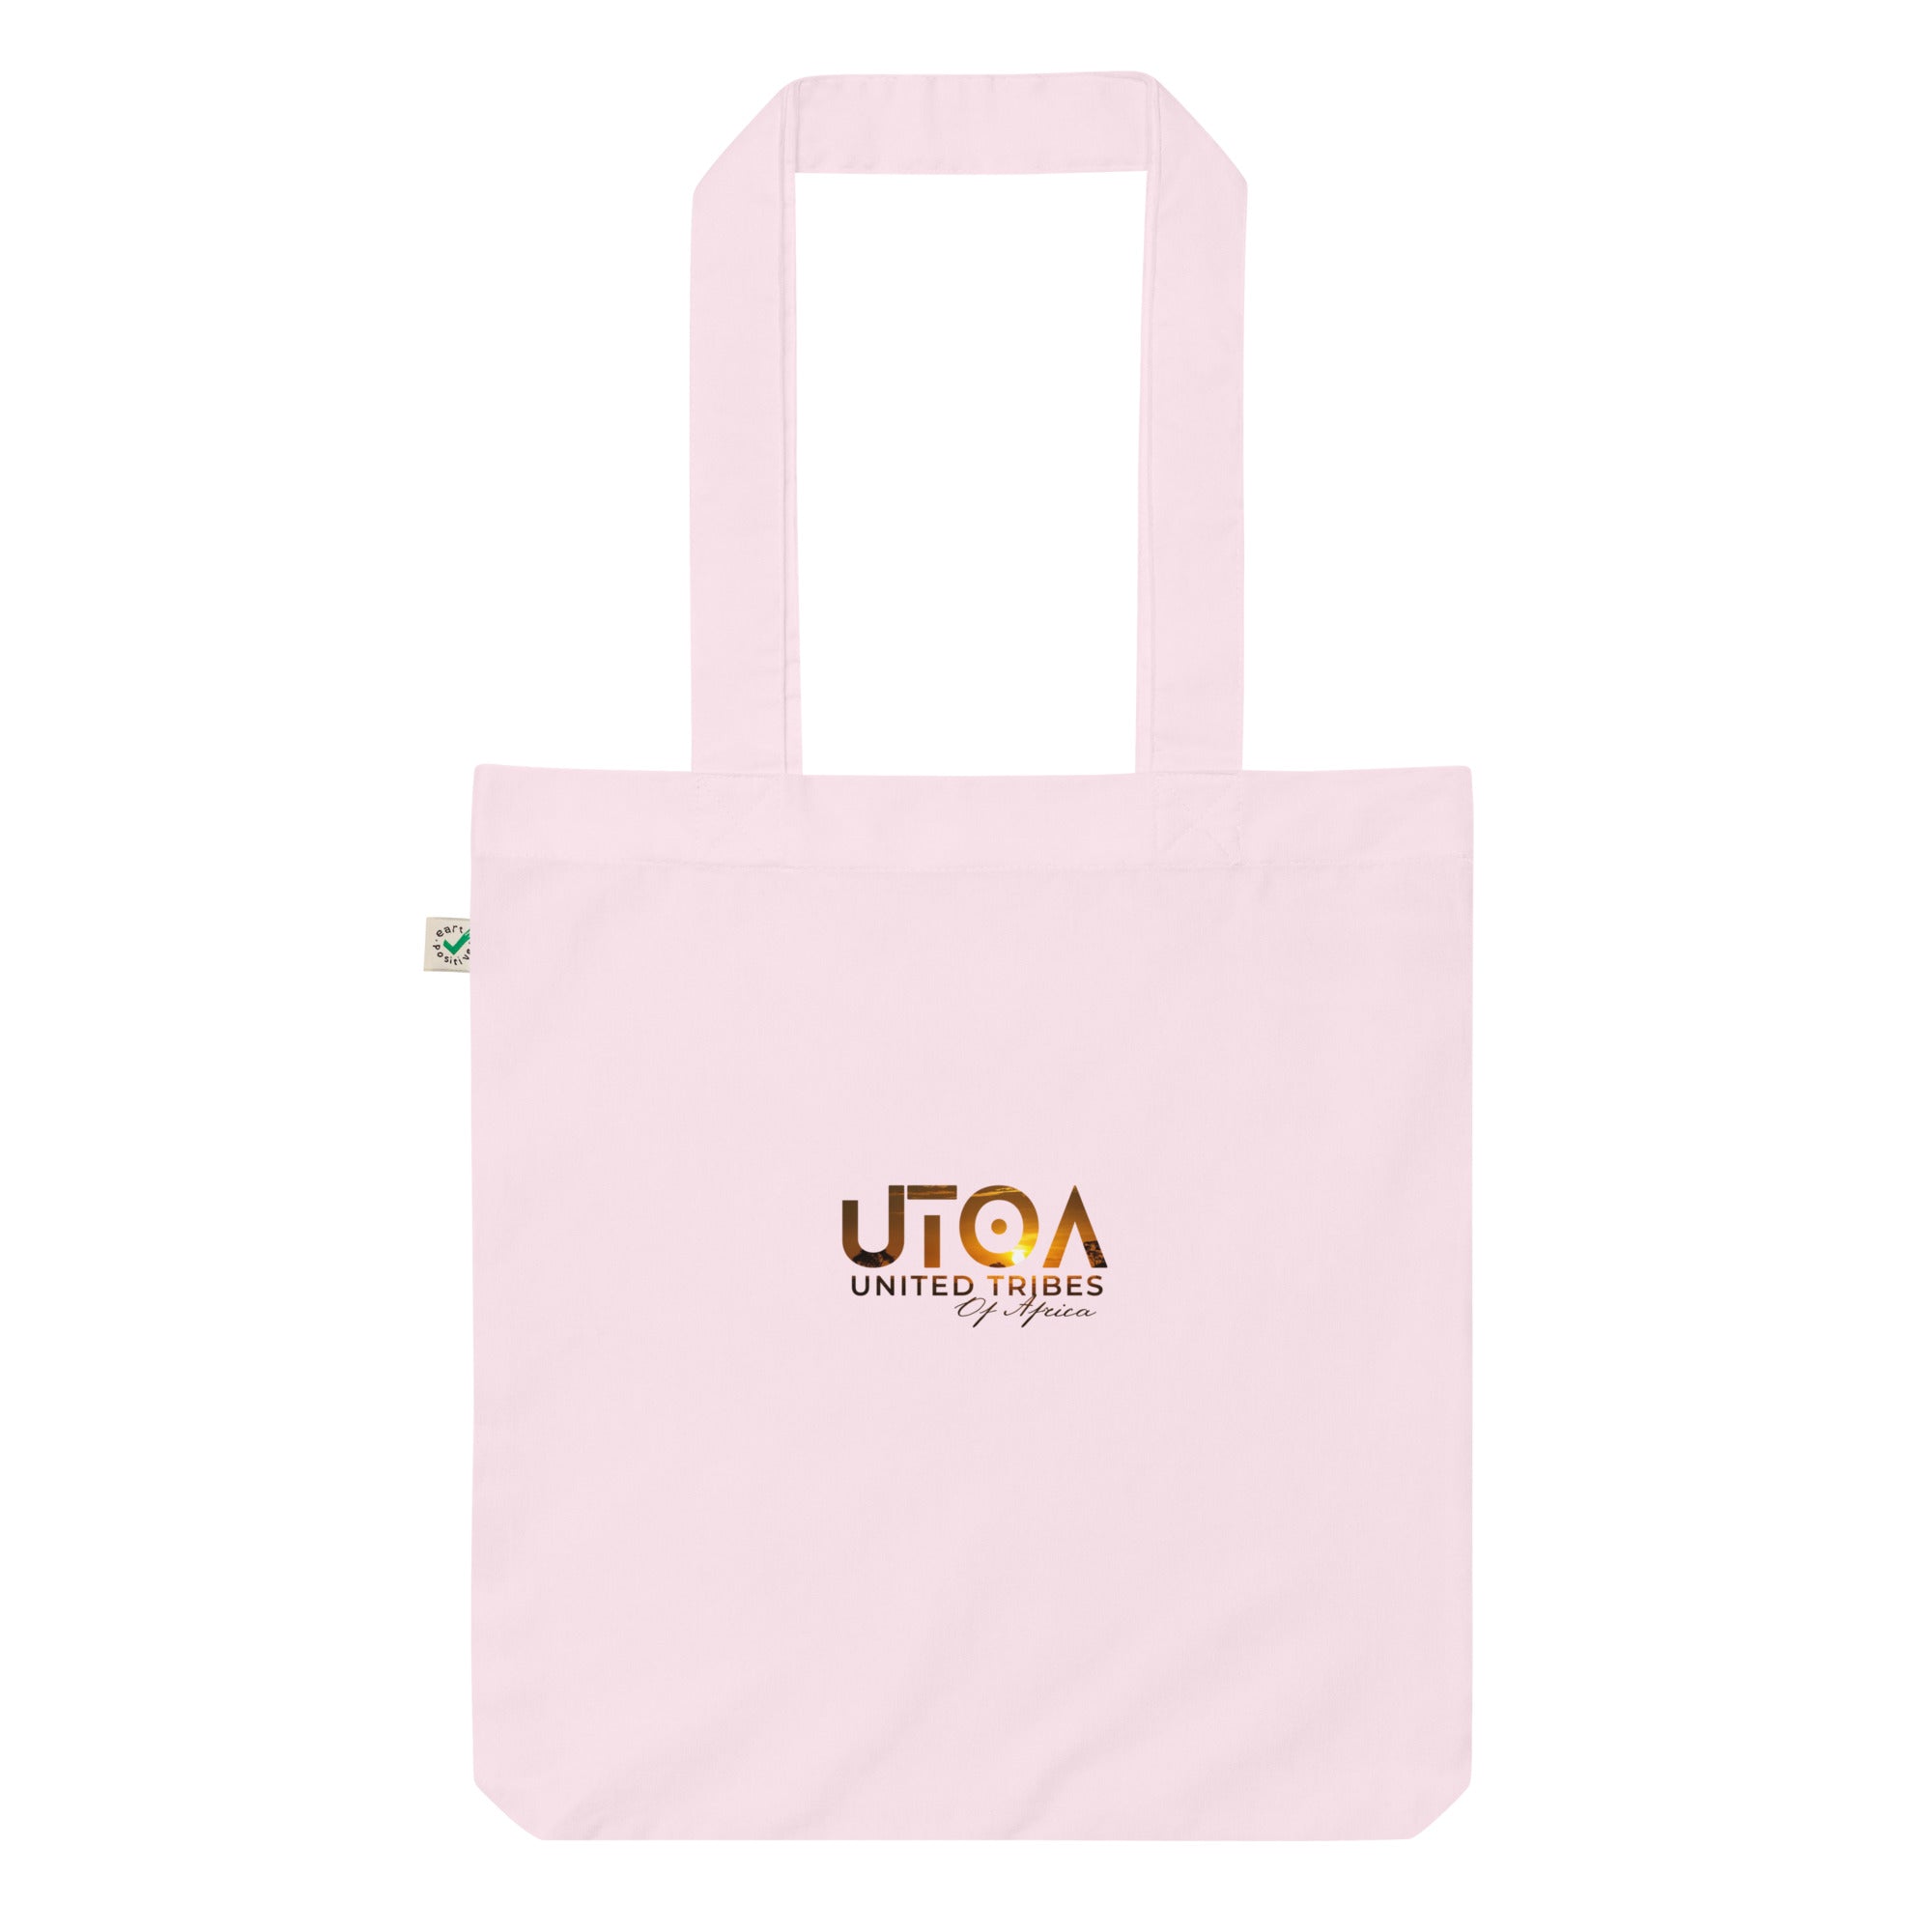 HUOA Logo Eco bag – Hawaii United Okinawa Association Online Store